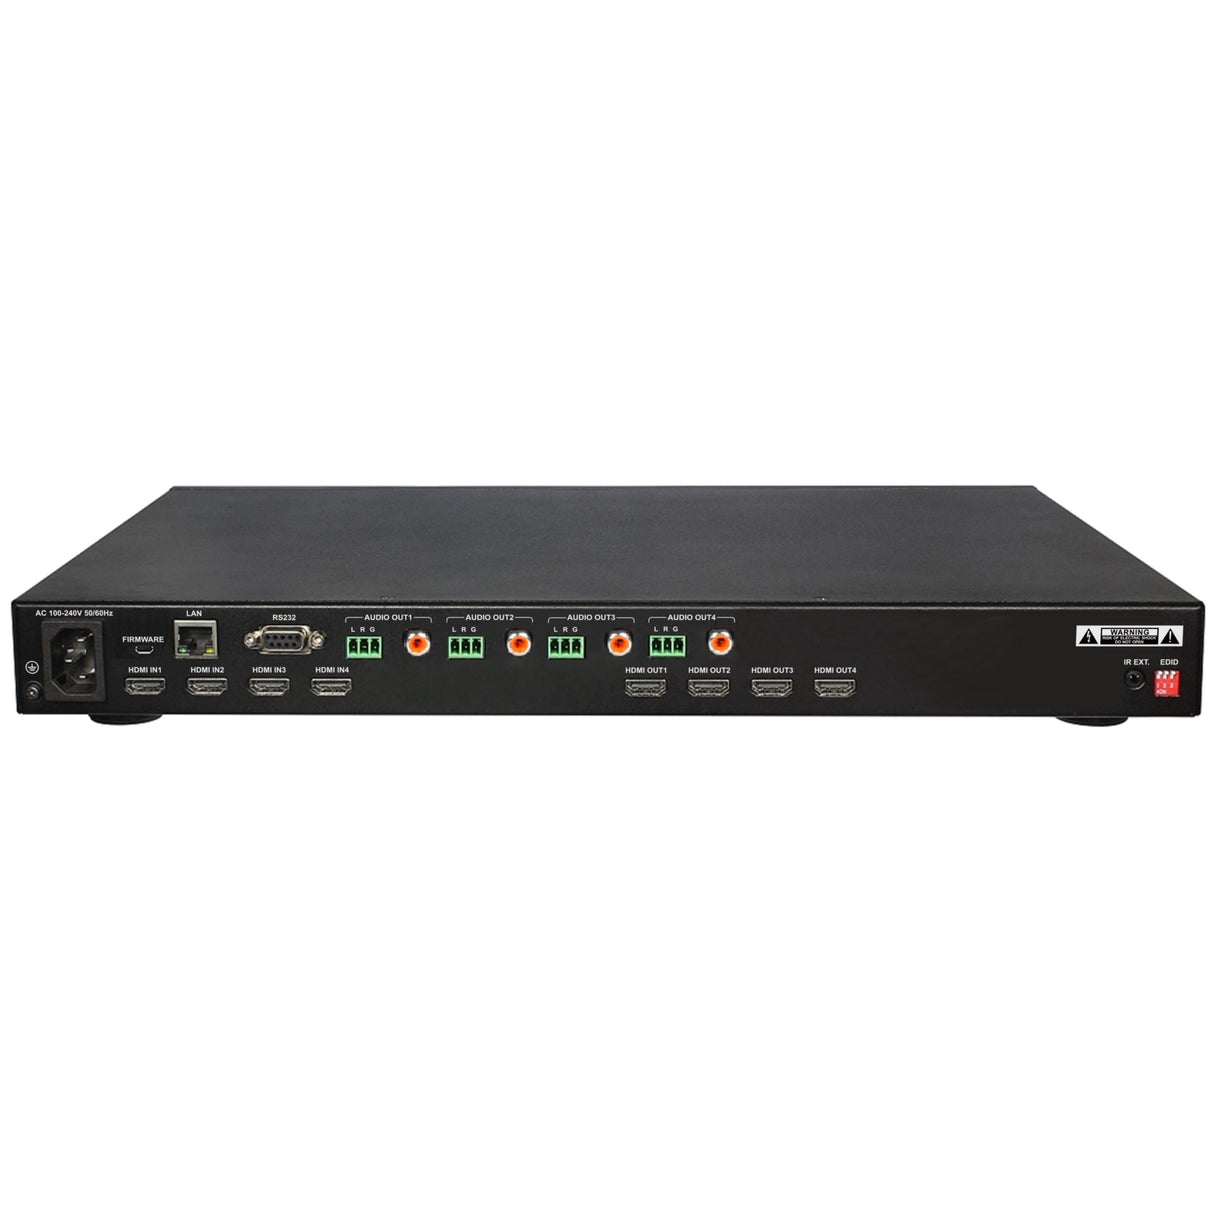 DigitaLinx DL-HDM44A-H2 4K60 4 x 4 HDMI 2.0 Matrix Switcher